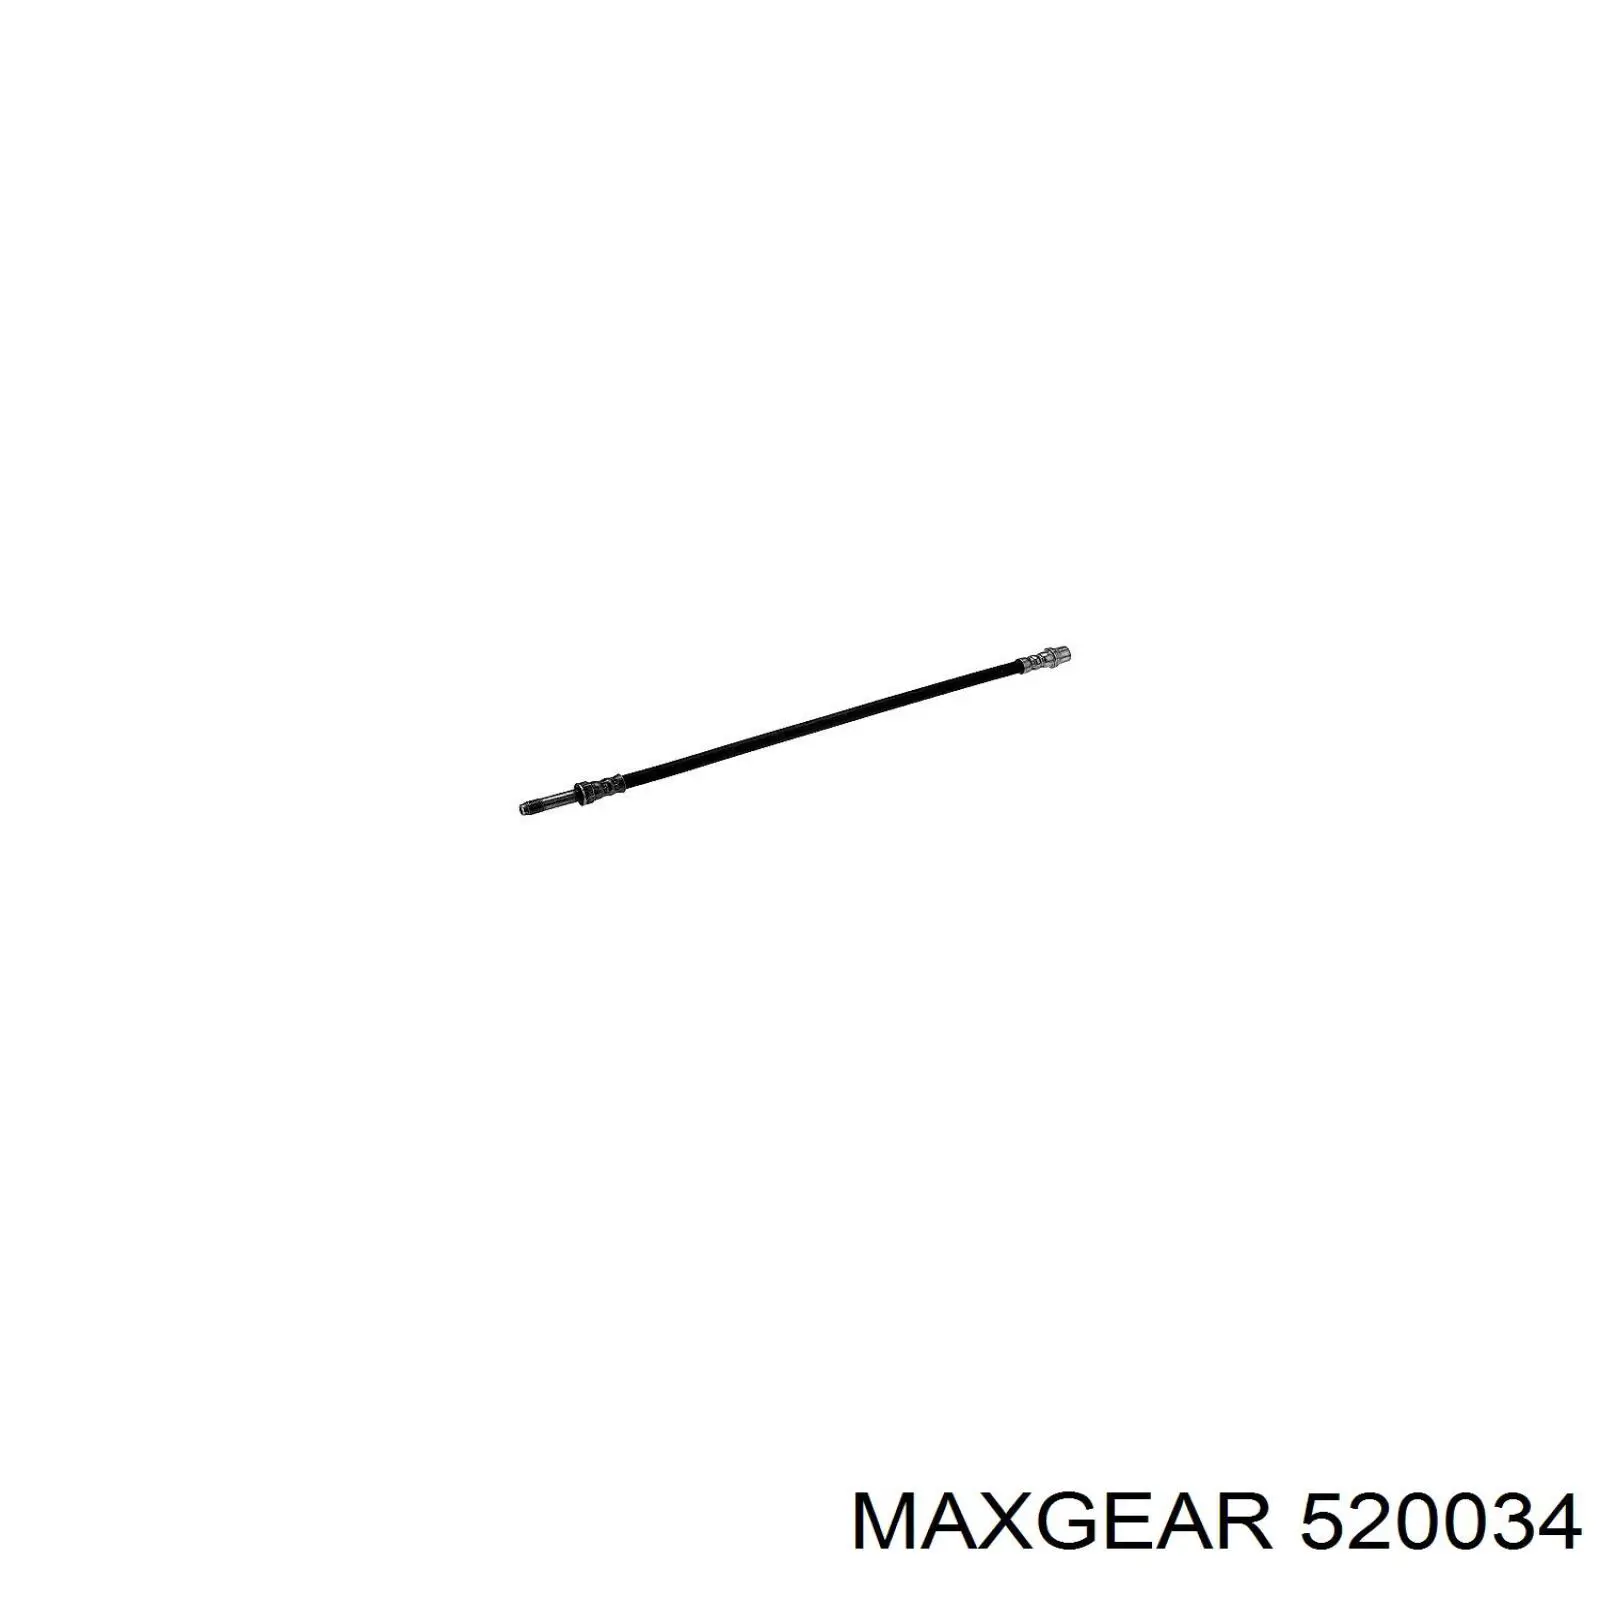 520034 Maxgear latiguillo de freno delantero